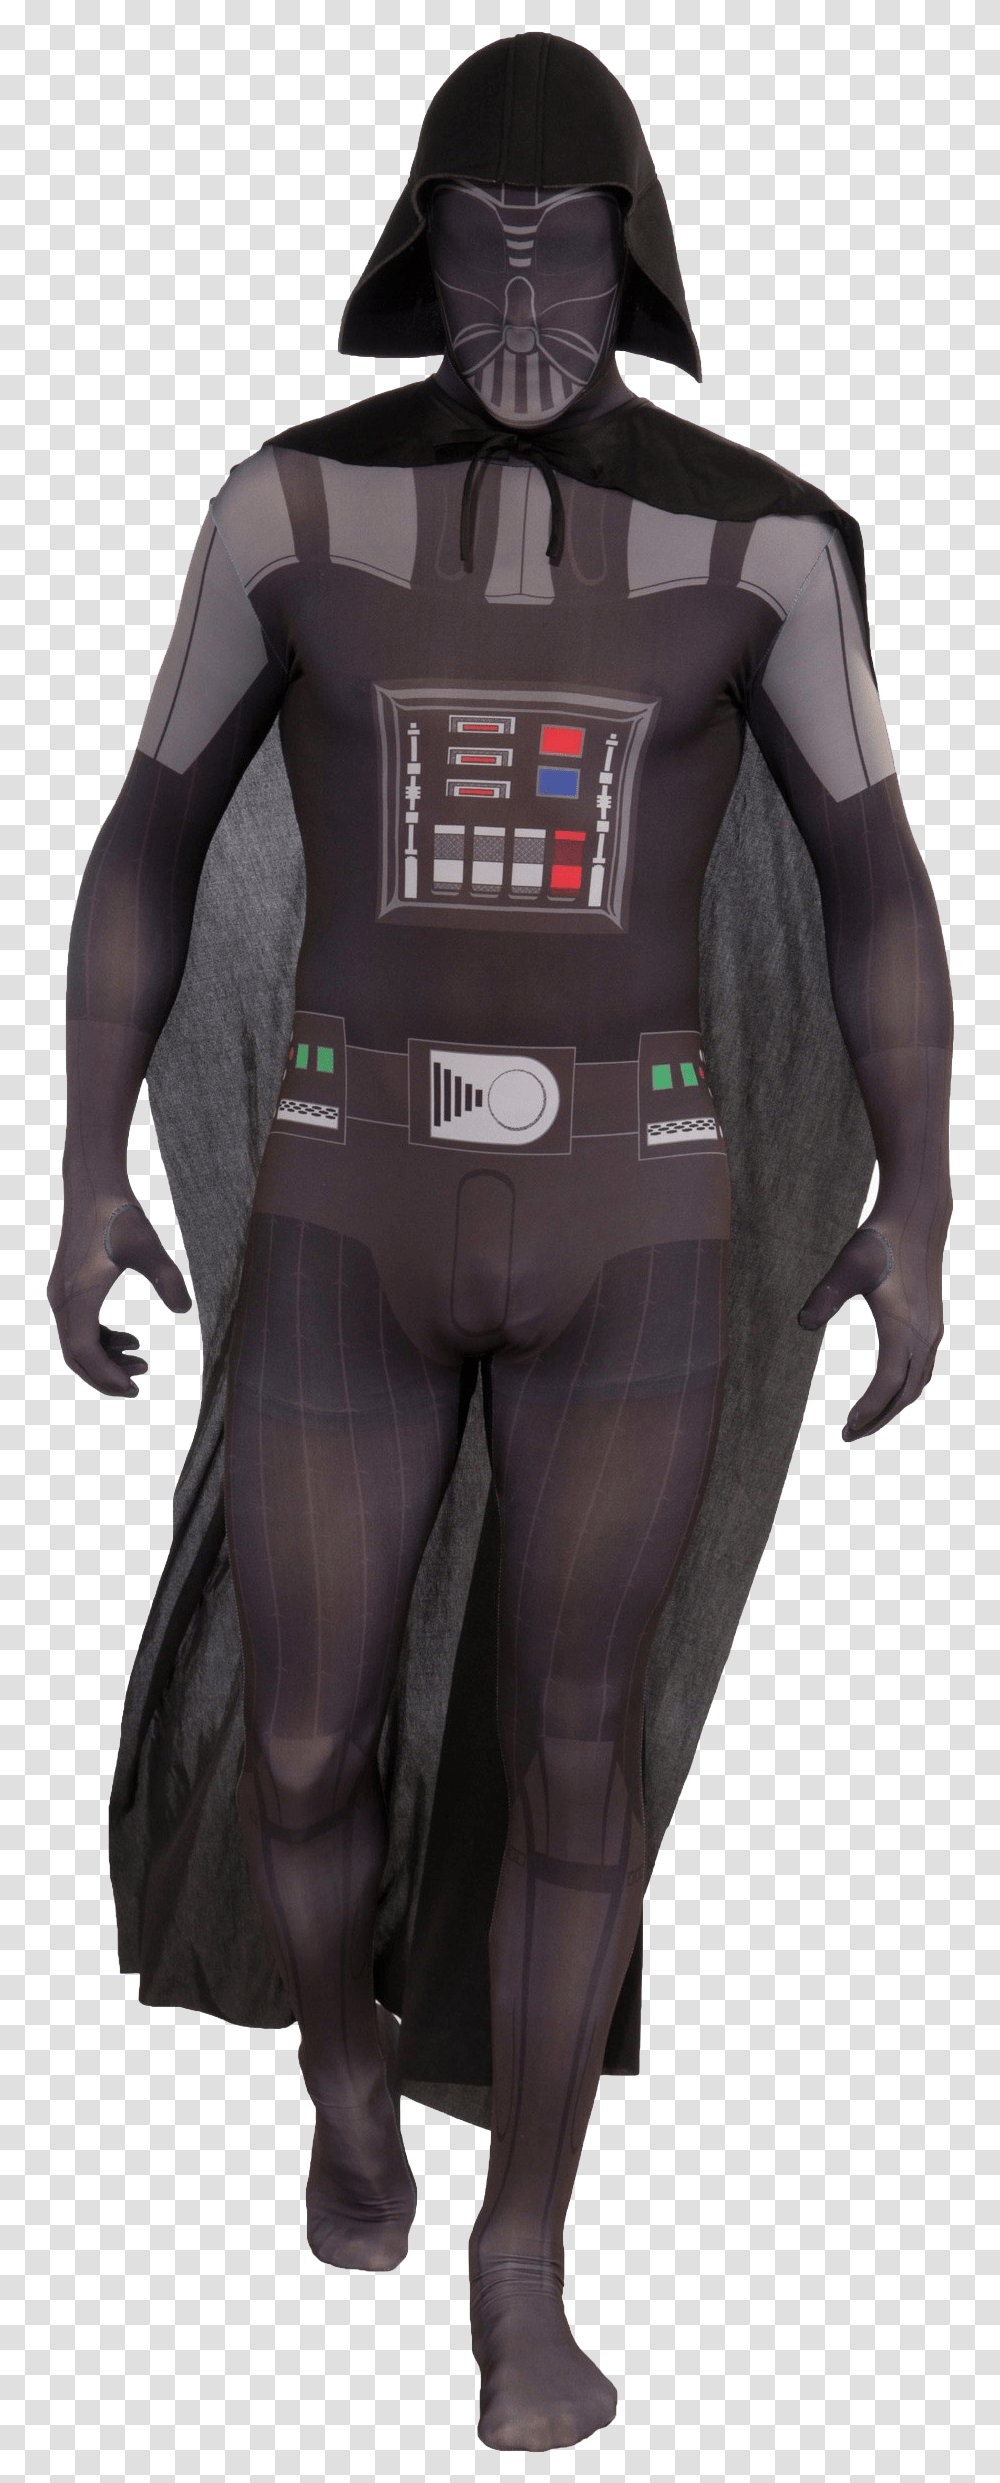 Darth Vader Free Image Download Darth Vader Suit, Pants, Hoodie, Sweatshirt Transparent Png